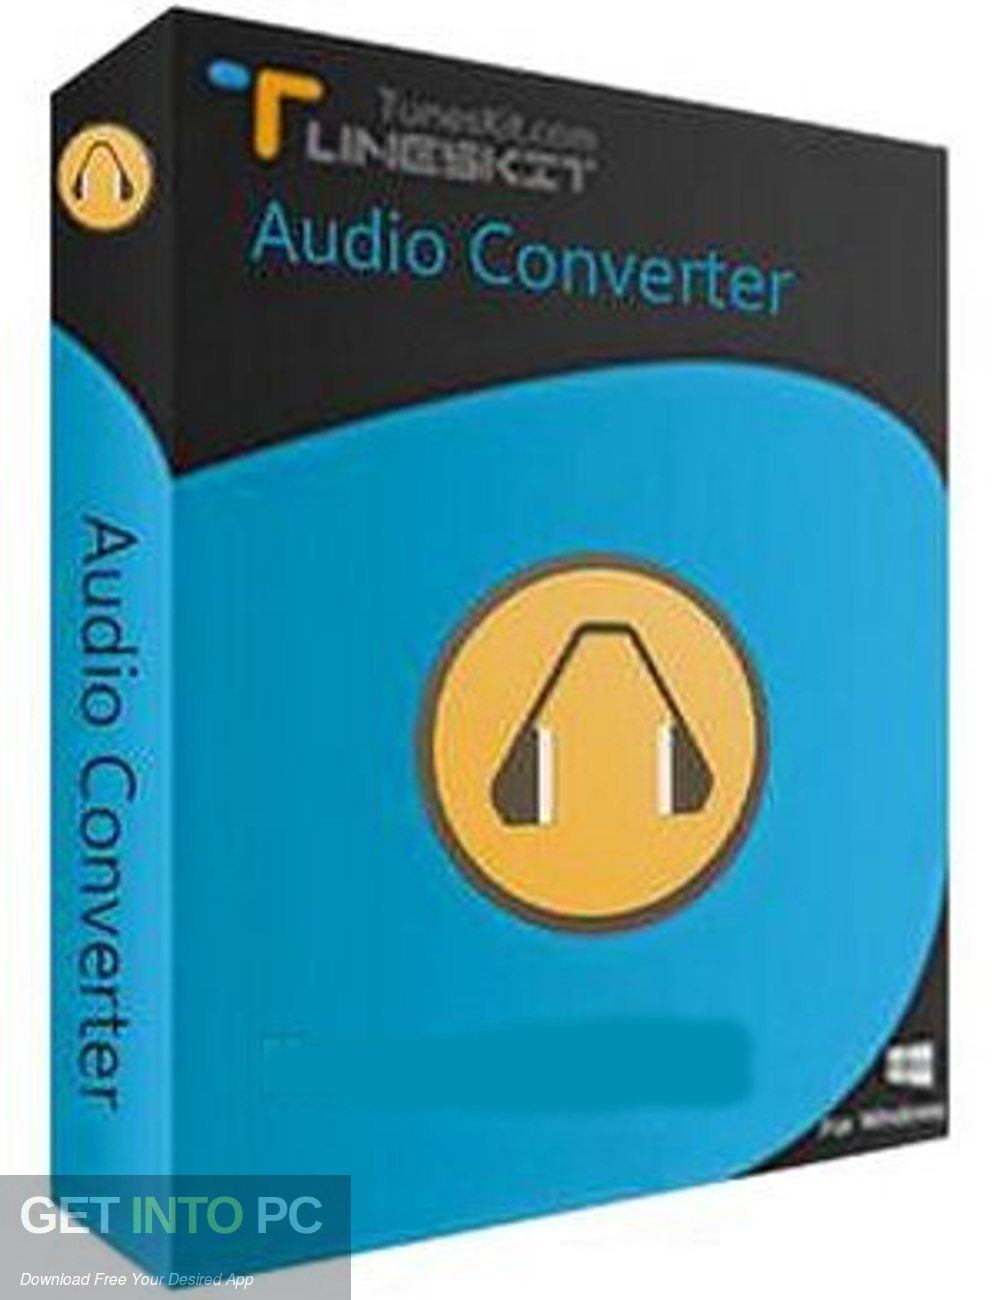 Картинки TUNESKIT Audio Converter. Get tune net